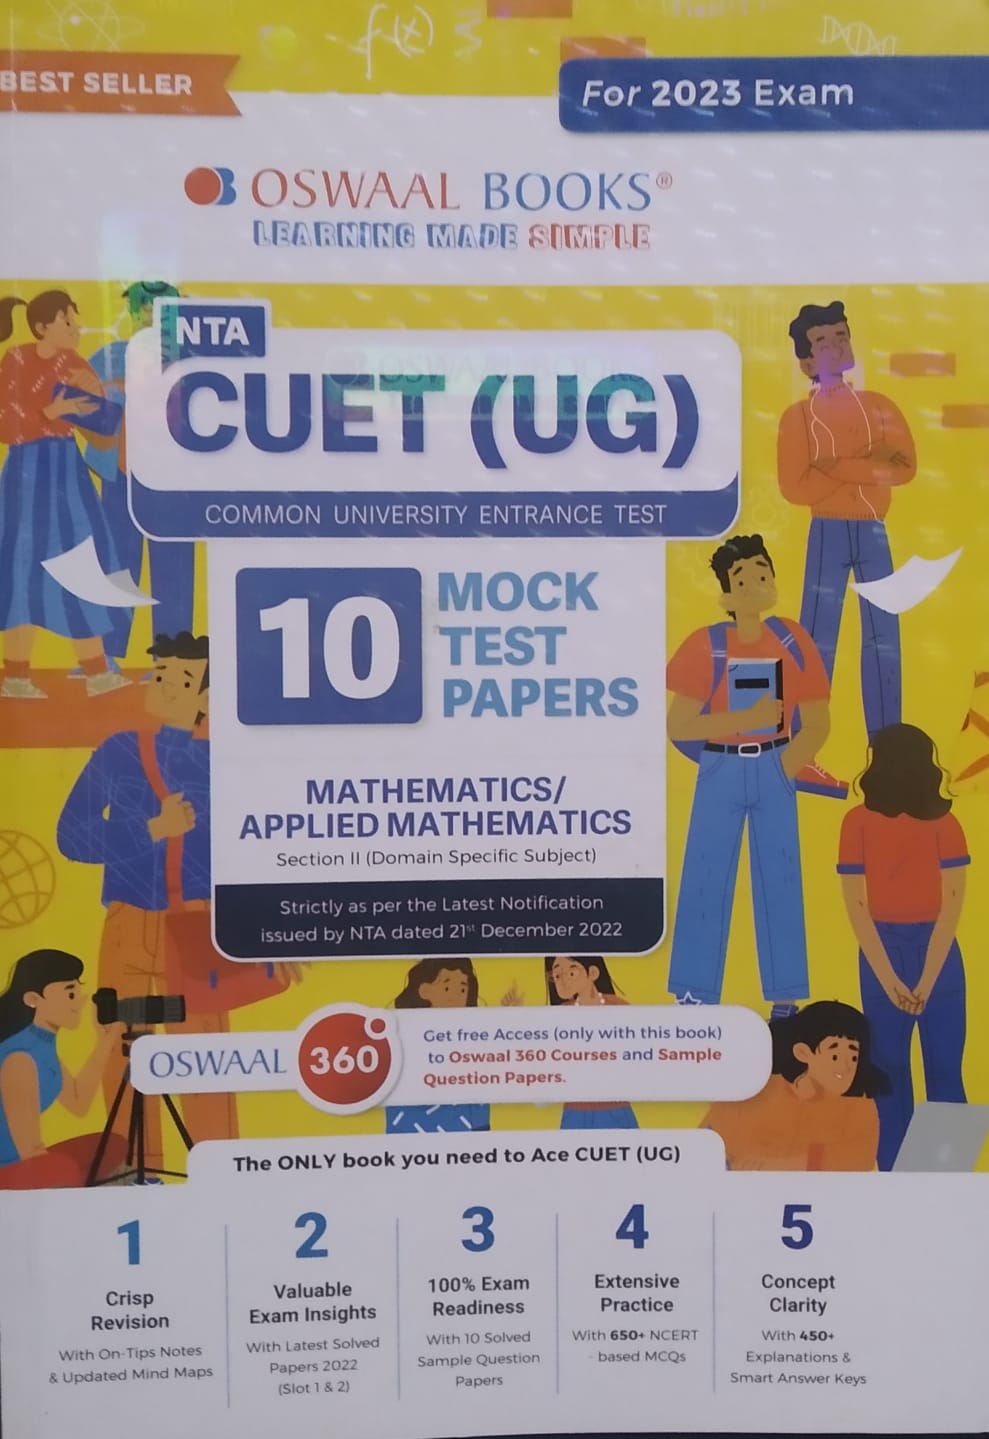 OSWAAL NTA CUET (UG) 10 Mock Test Papers Mathematics/ Applied Mathematics